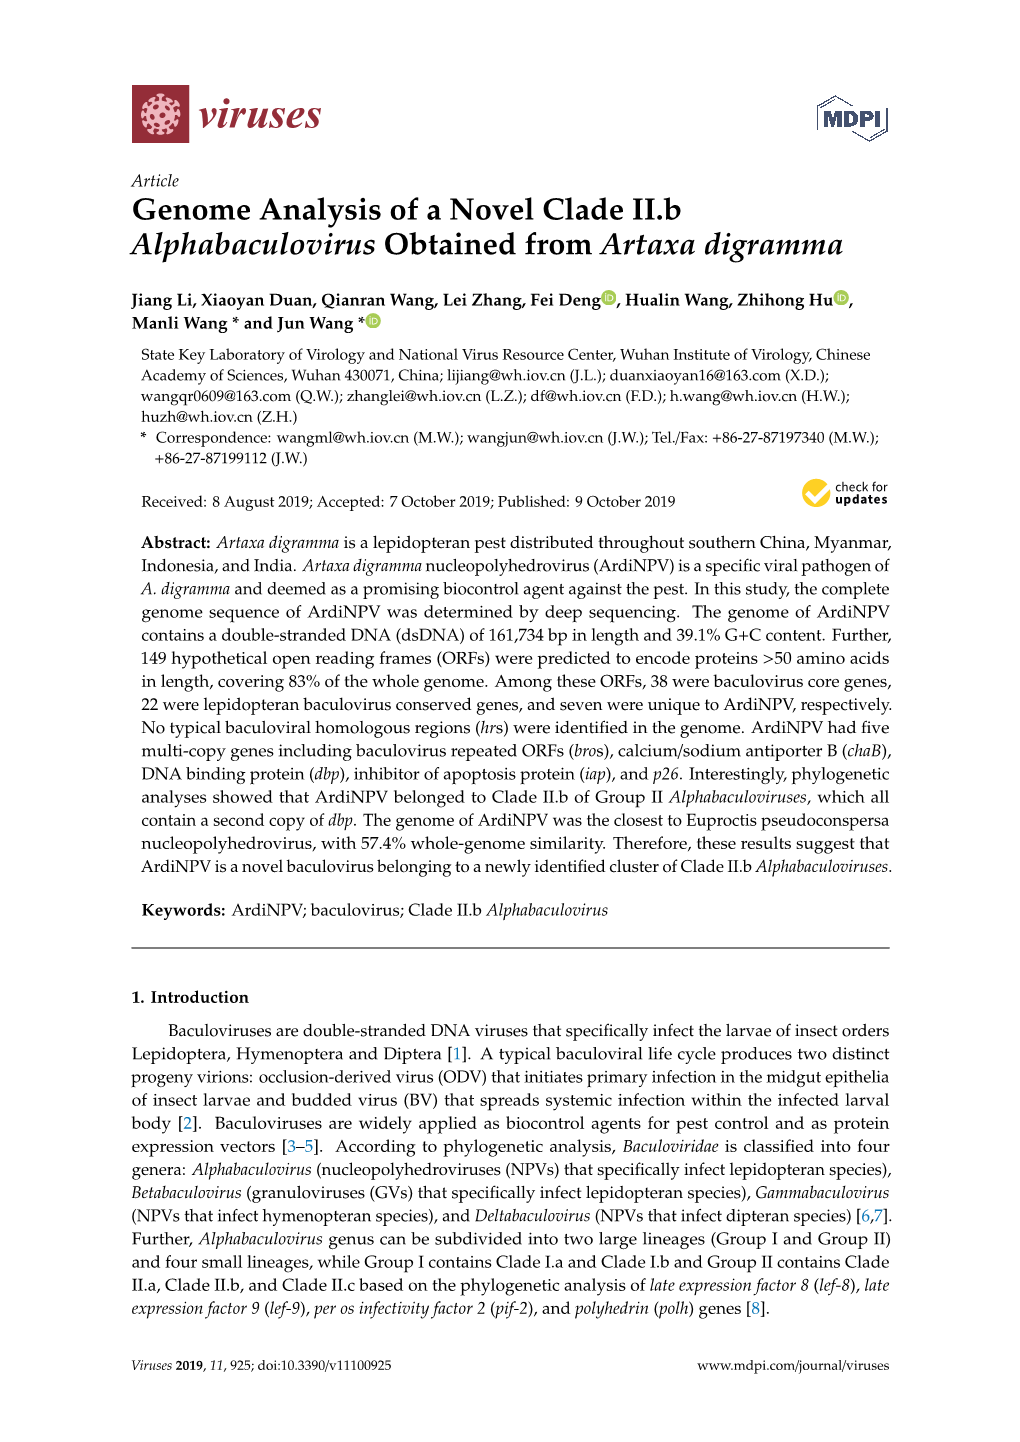 Genome Analysis of a Novel Clade II.B Alphabaculovirus Obtained from Artaxa Digramma